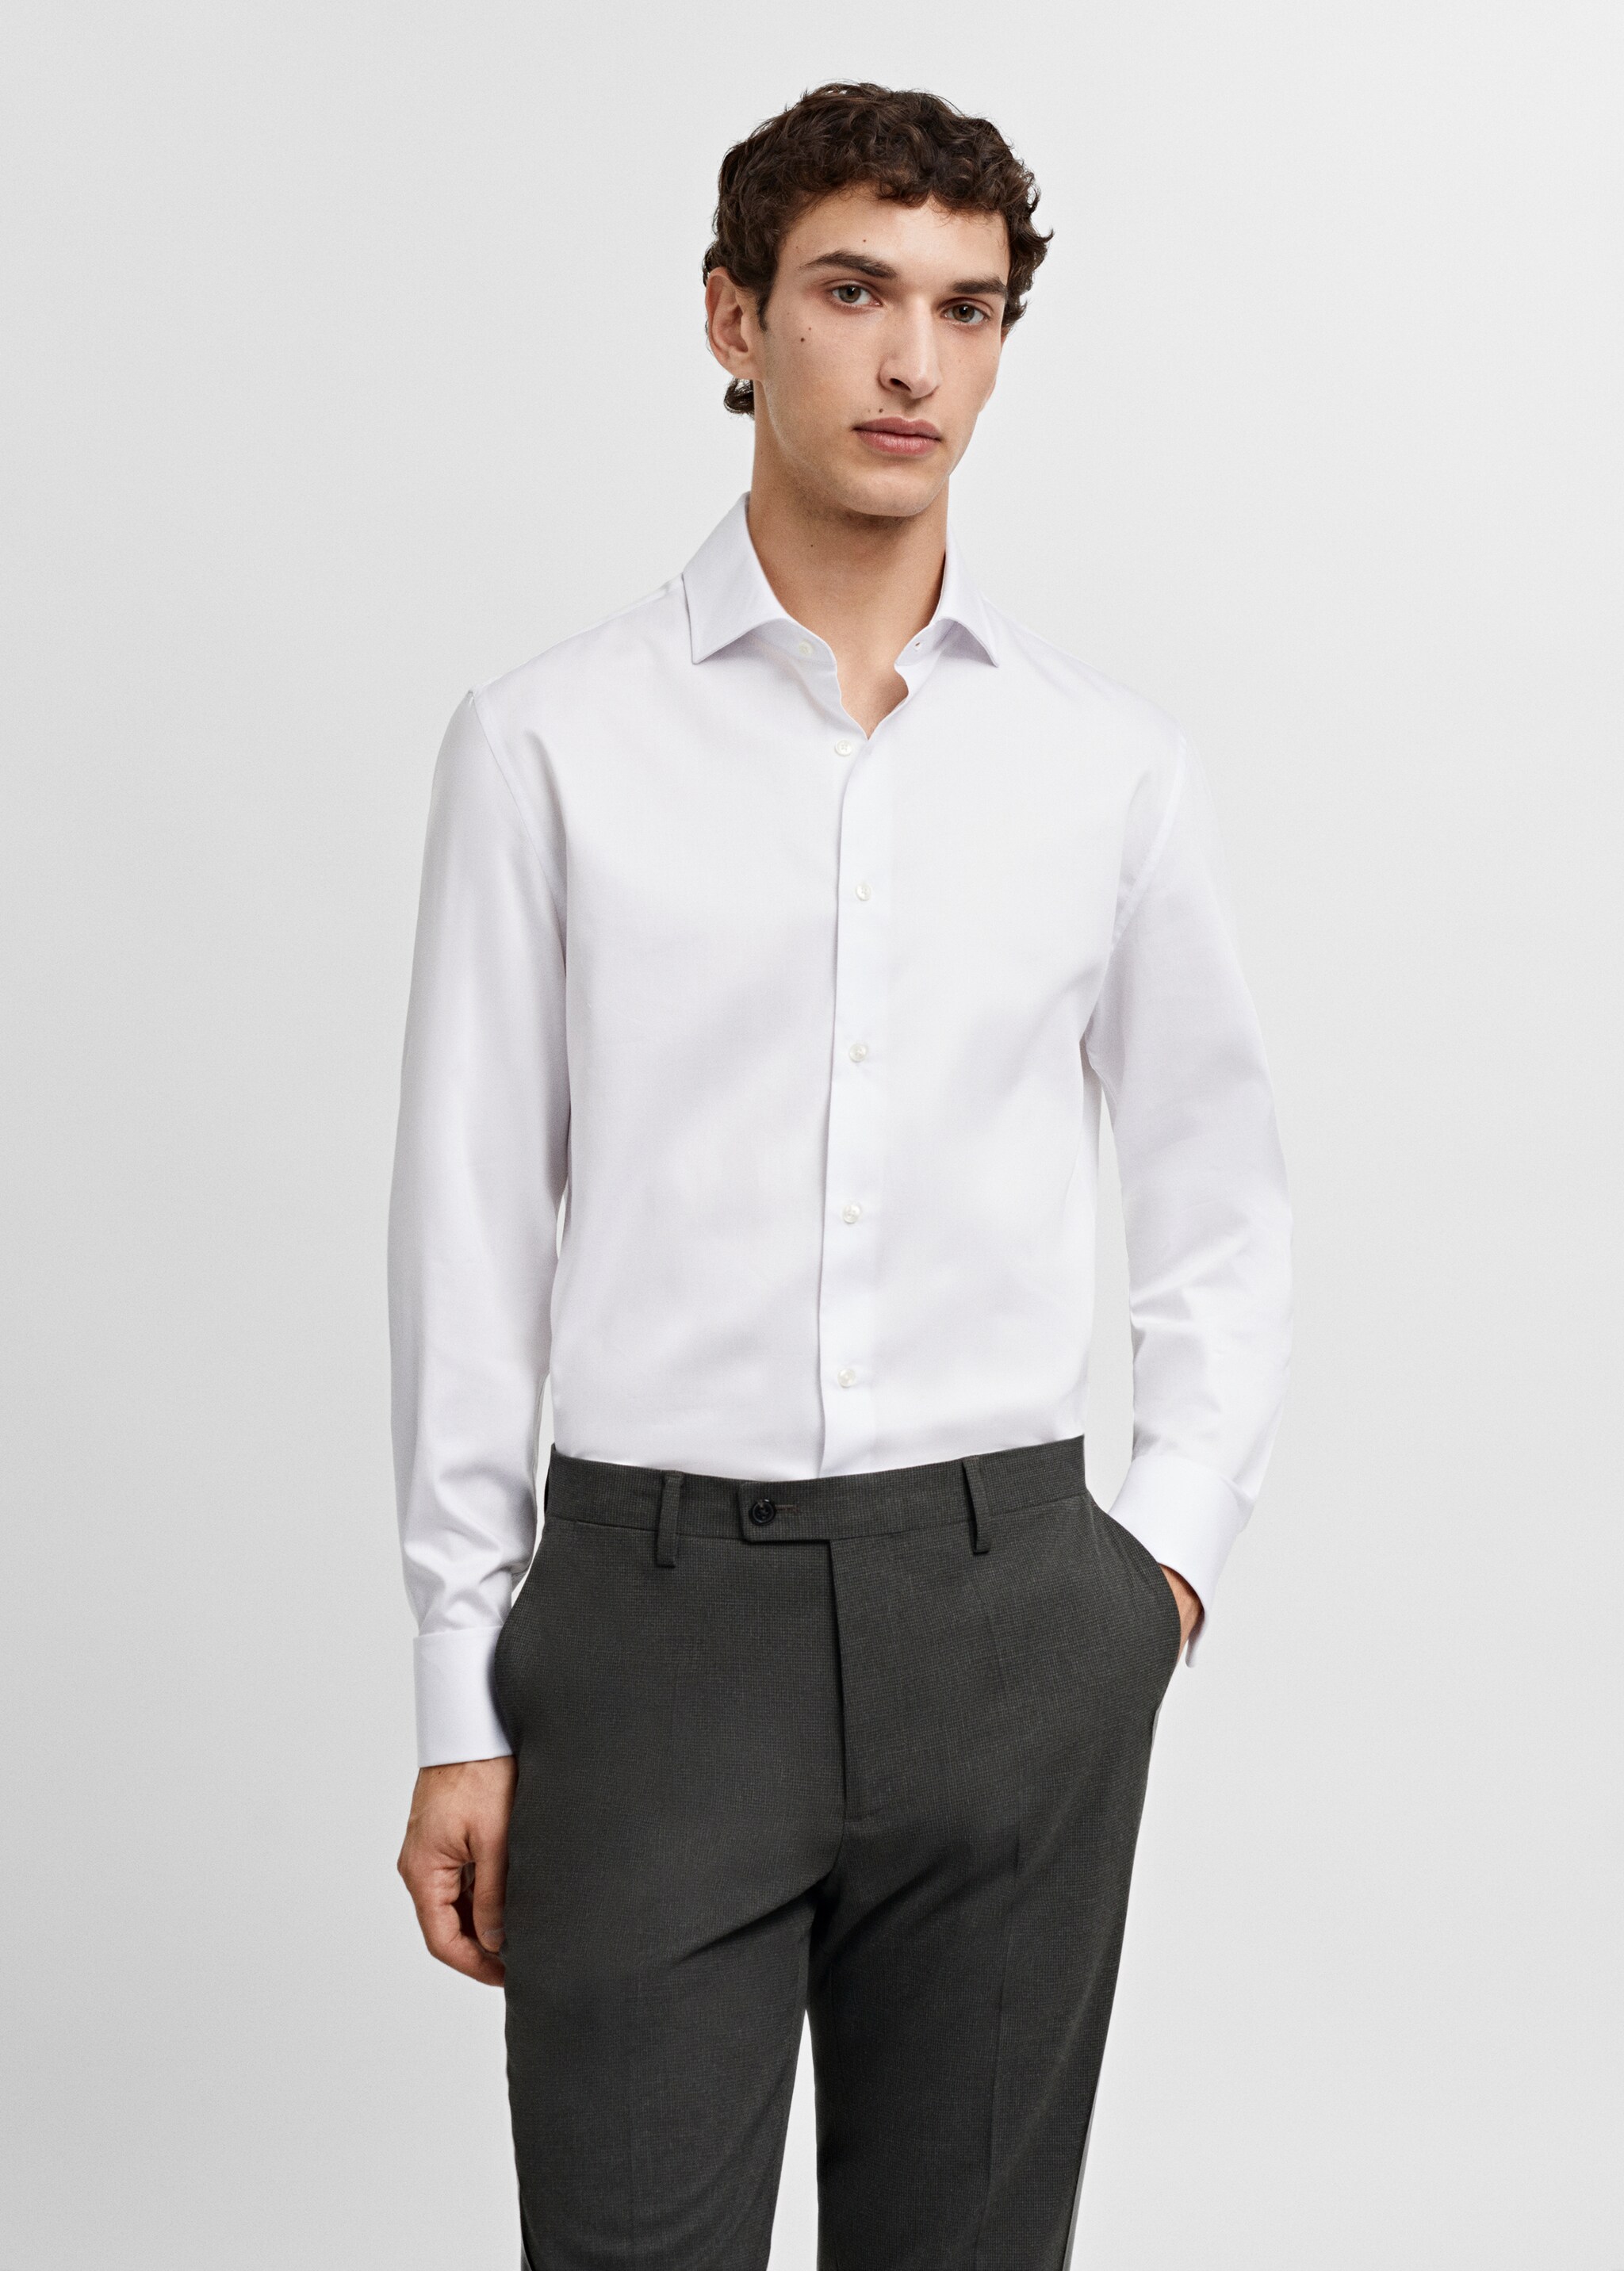 Regular-fit suit shirt with cufflinks - Medium plane